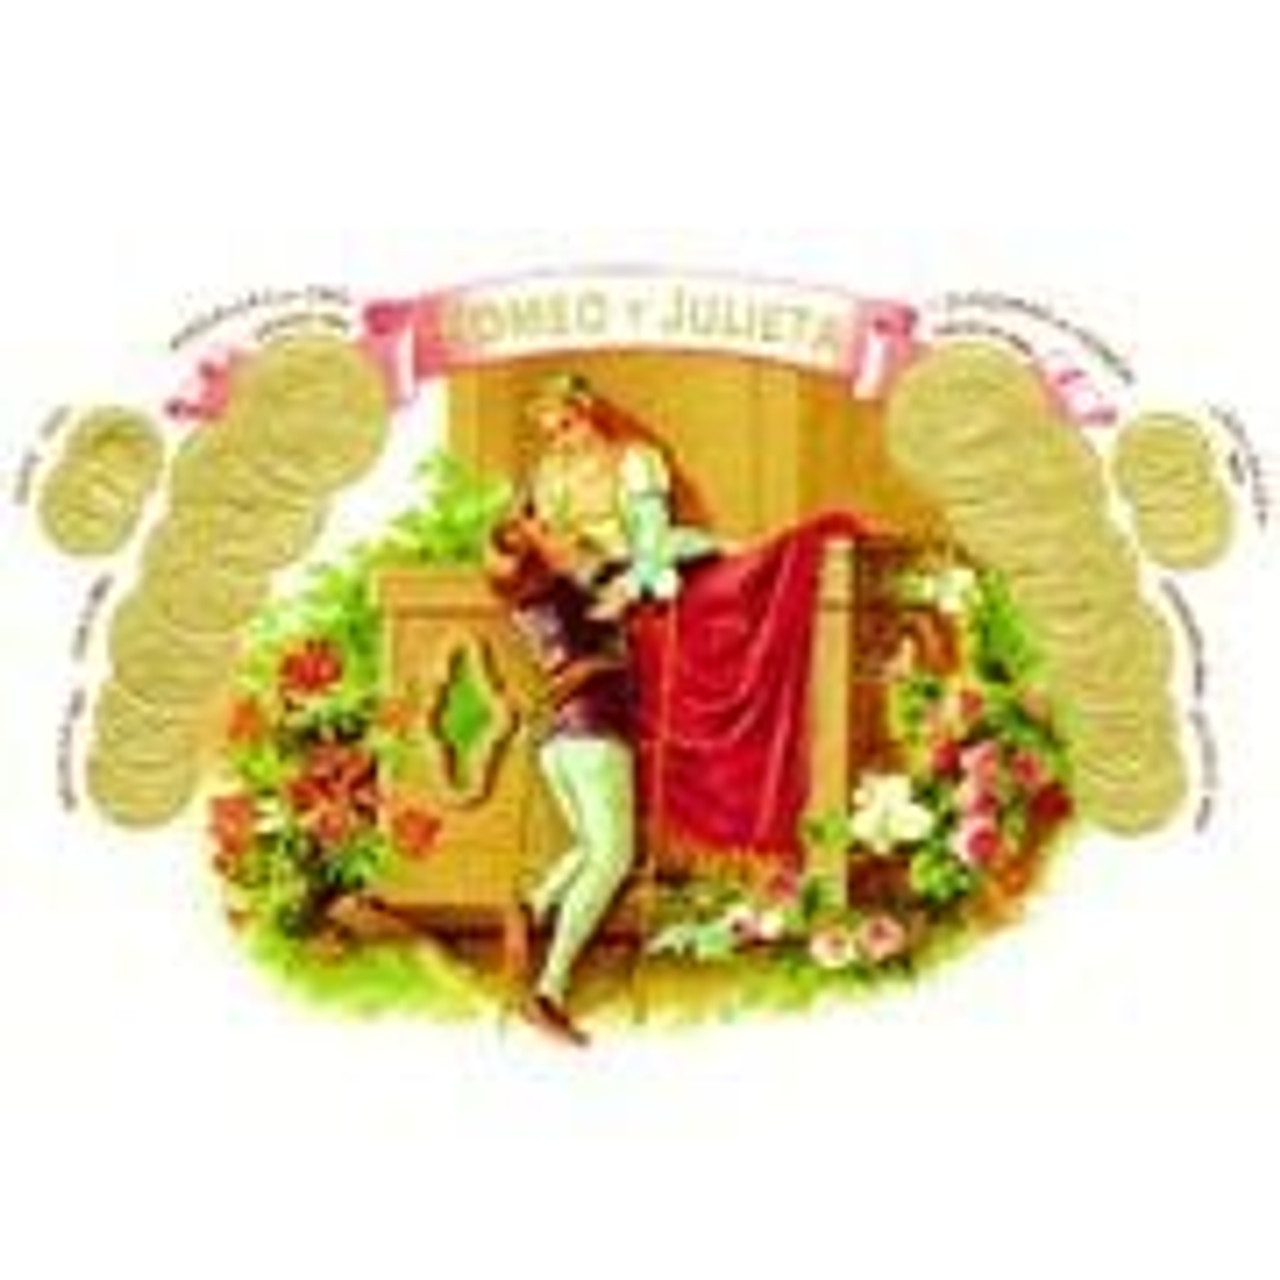 Romeo y Julieta Logo